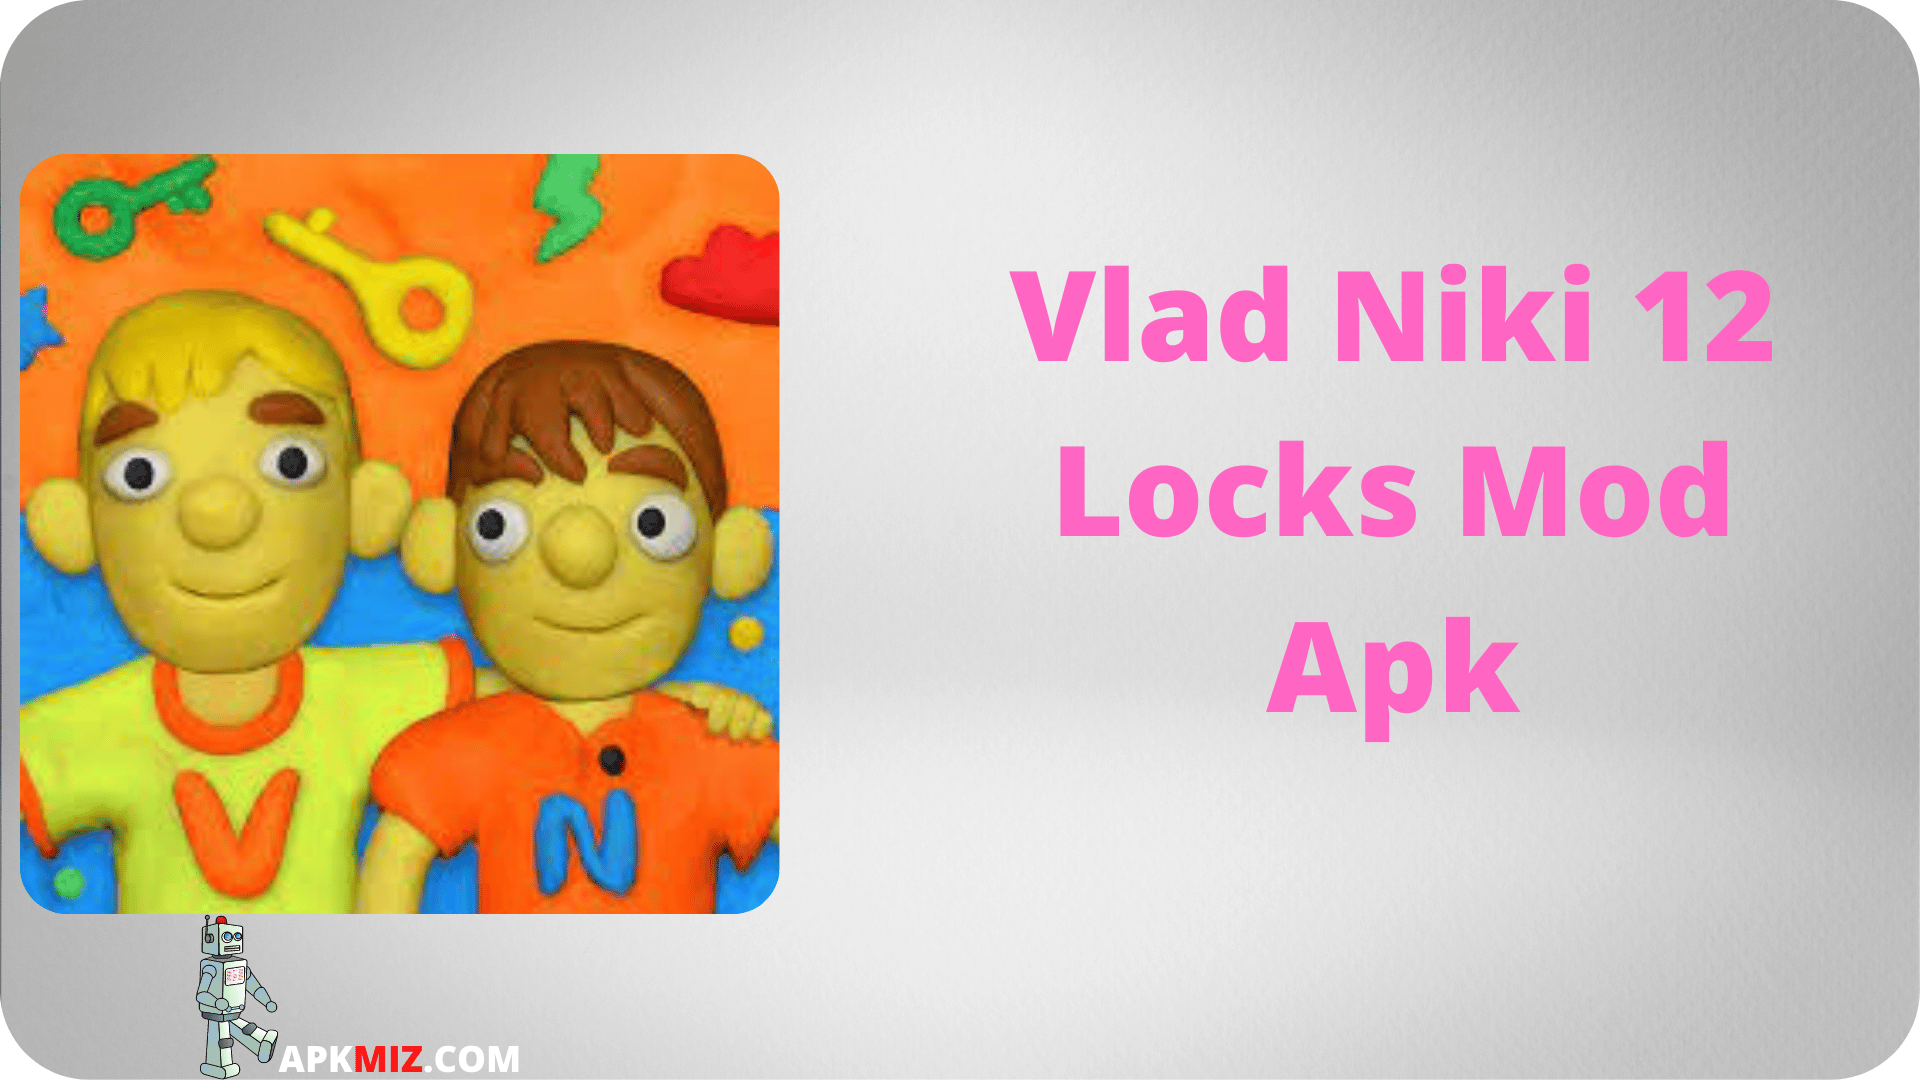 Vlad Niki 12 Locks Mod Apk